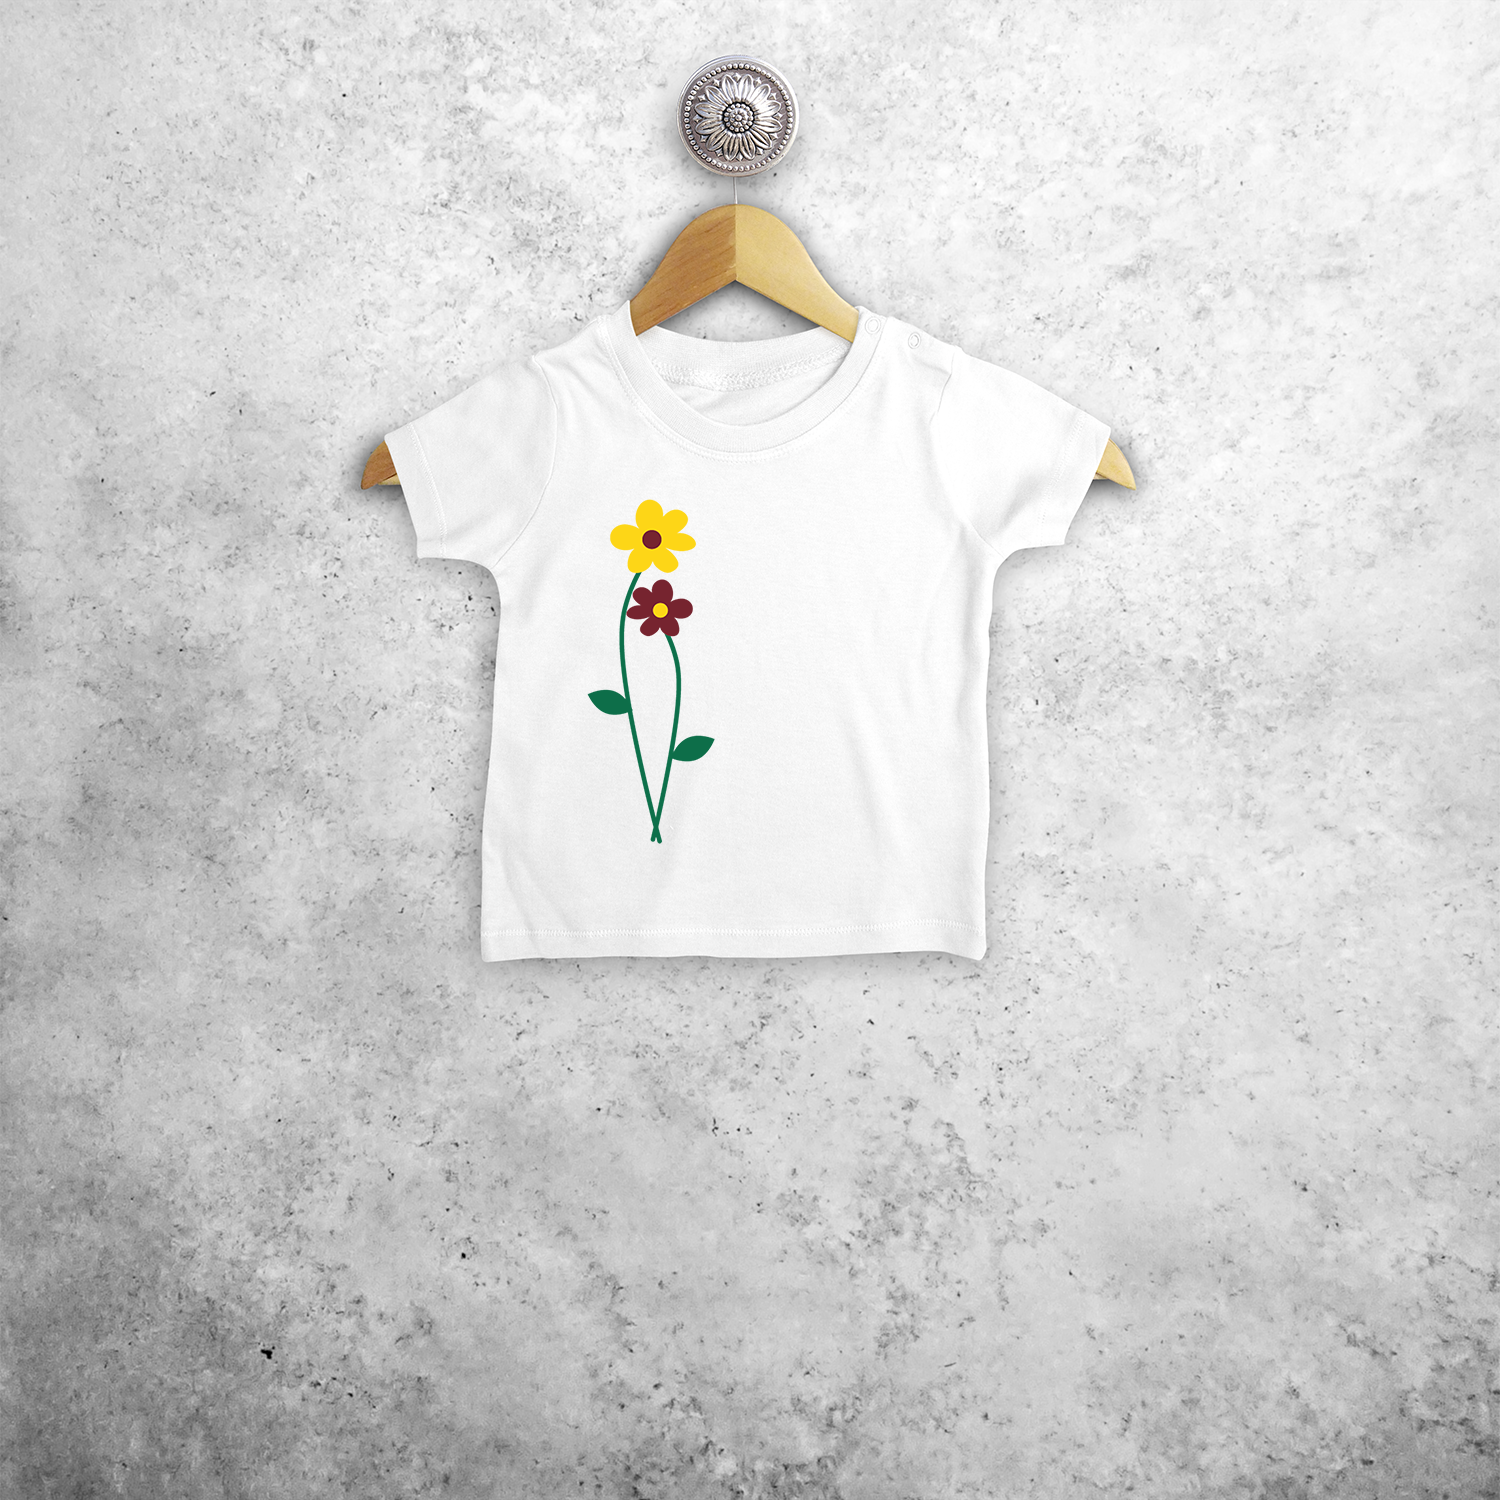 Flowers baby shortsleeve shirt